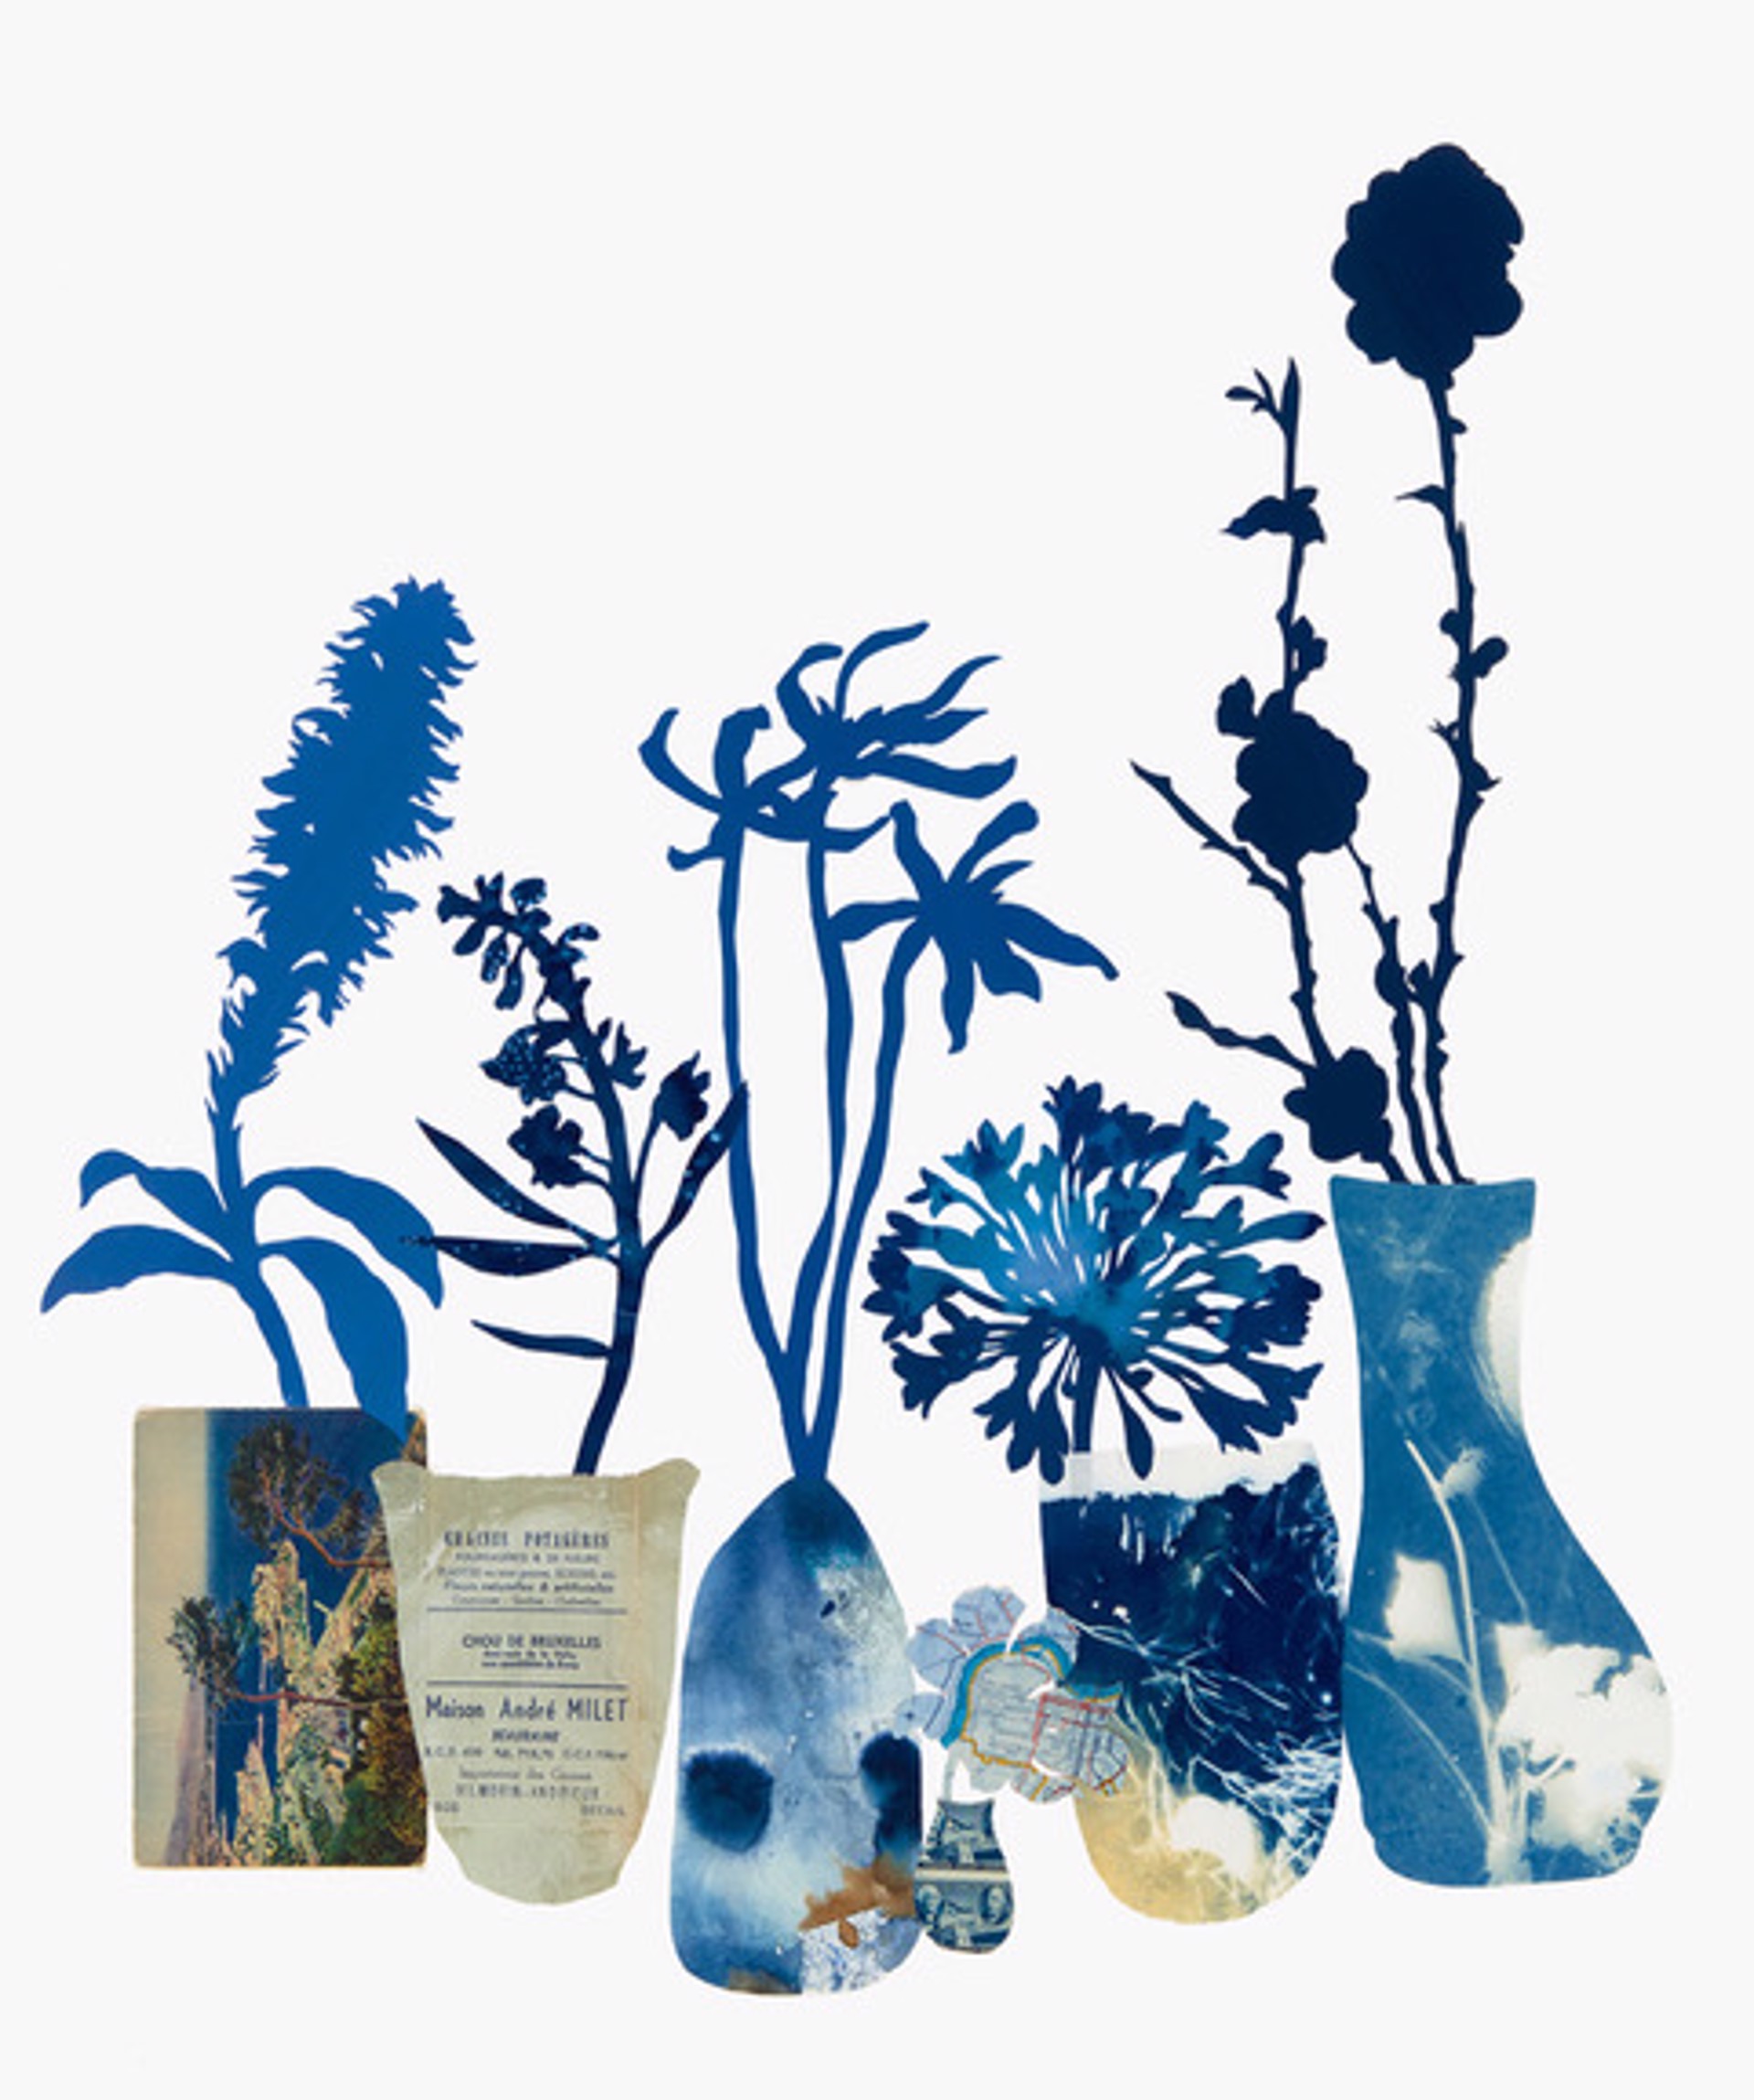 Evening Blooms in Conversation by Deborah Weiss